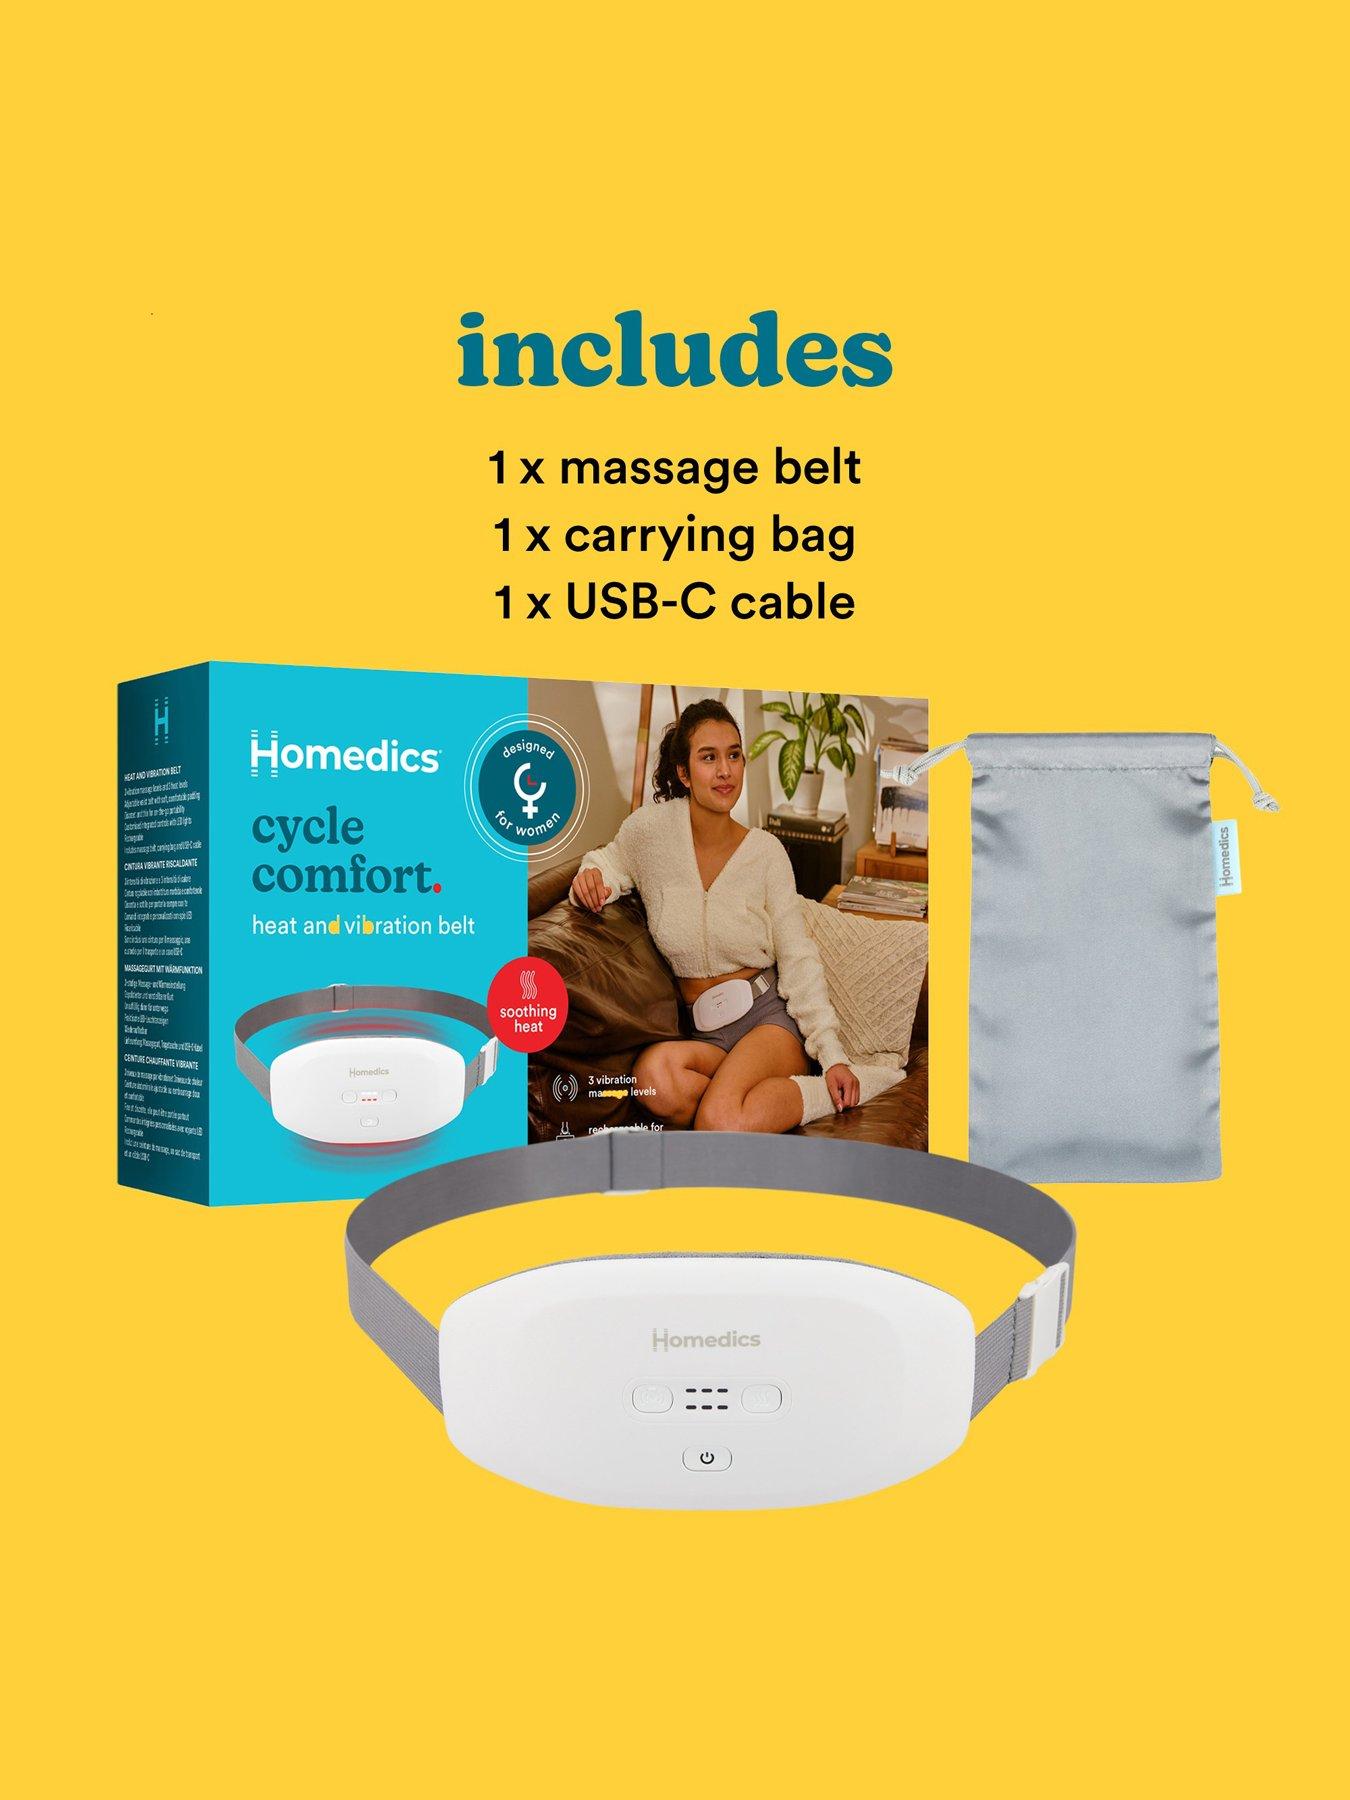 Homedics Women's Health Vibration Massage Belt